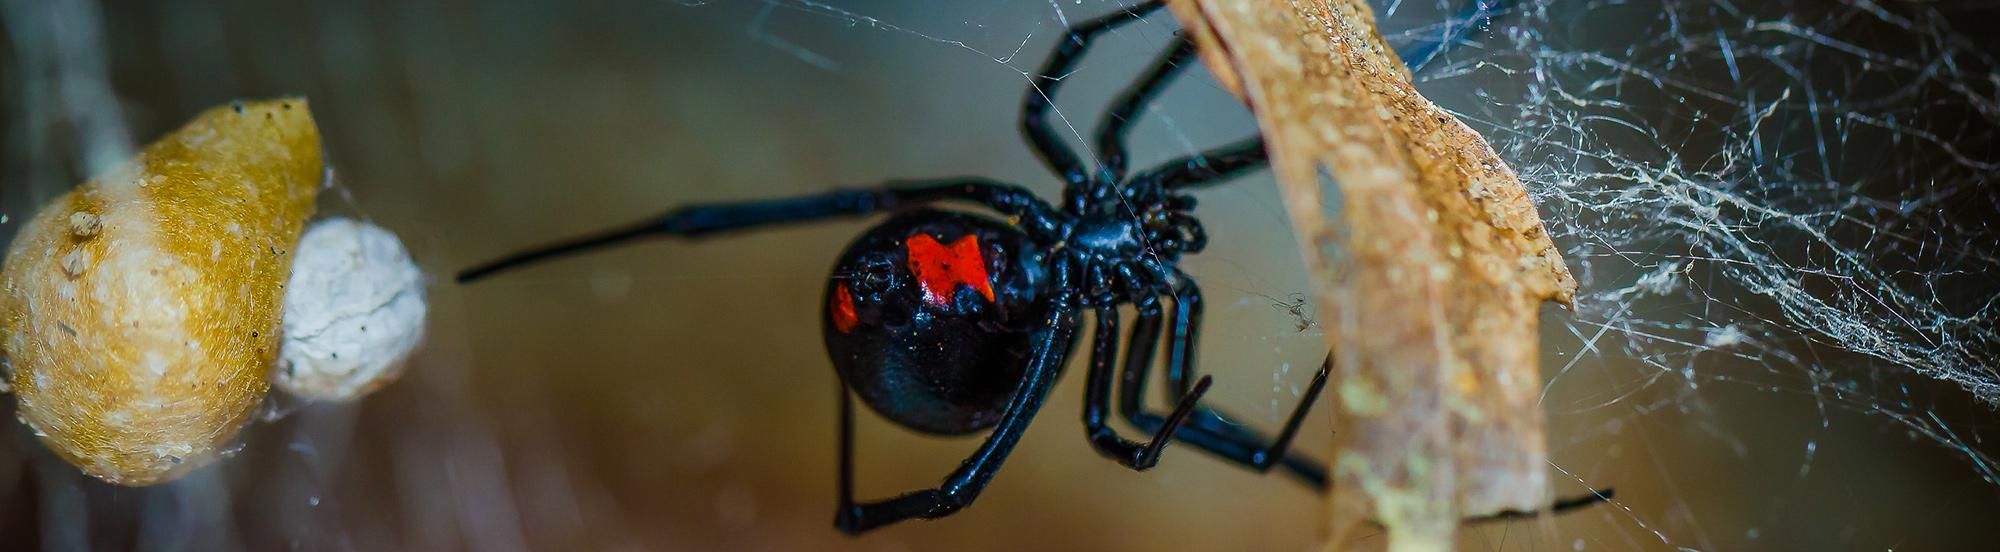 black widow spider building web